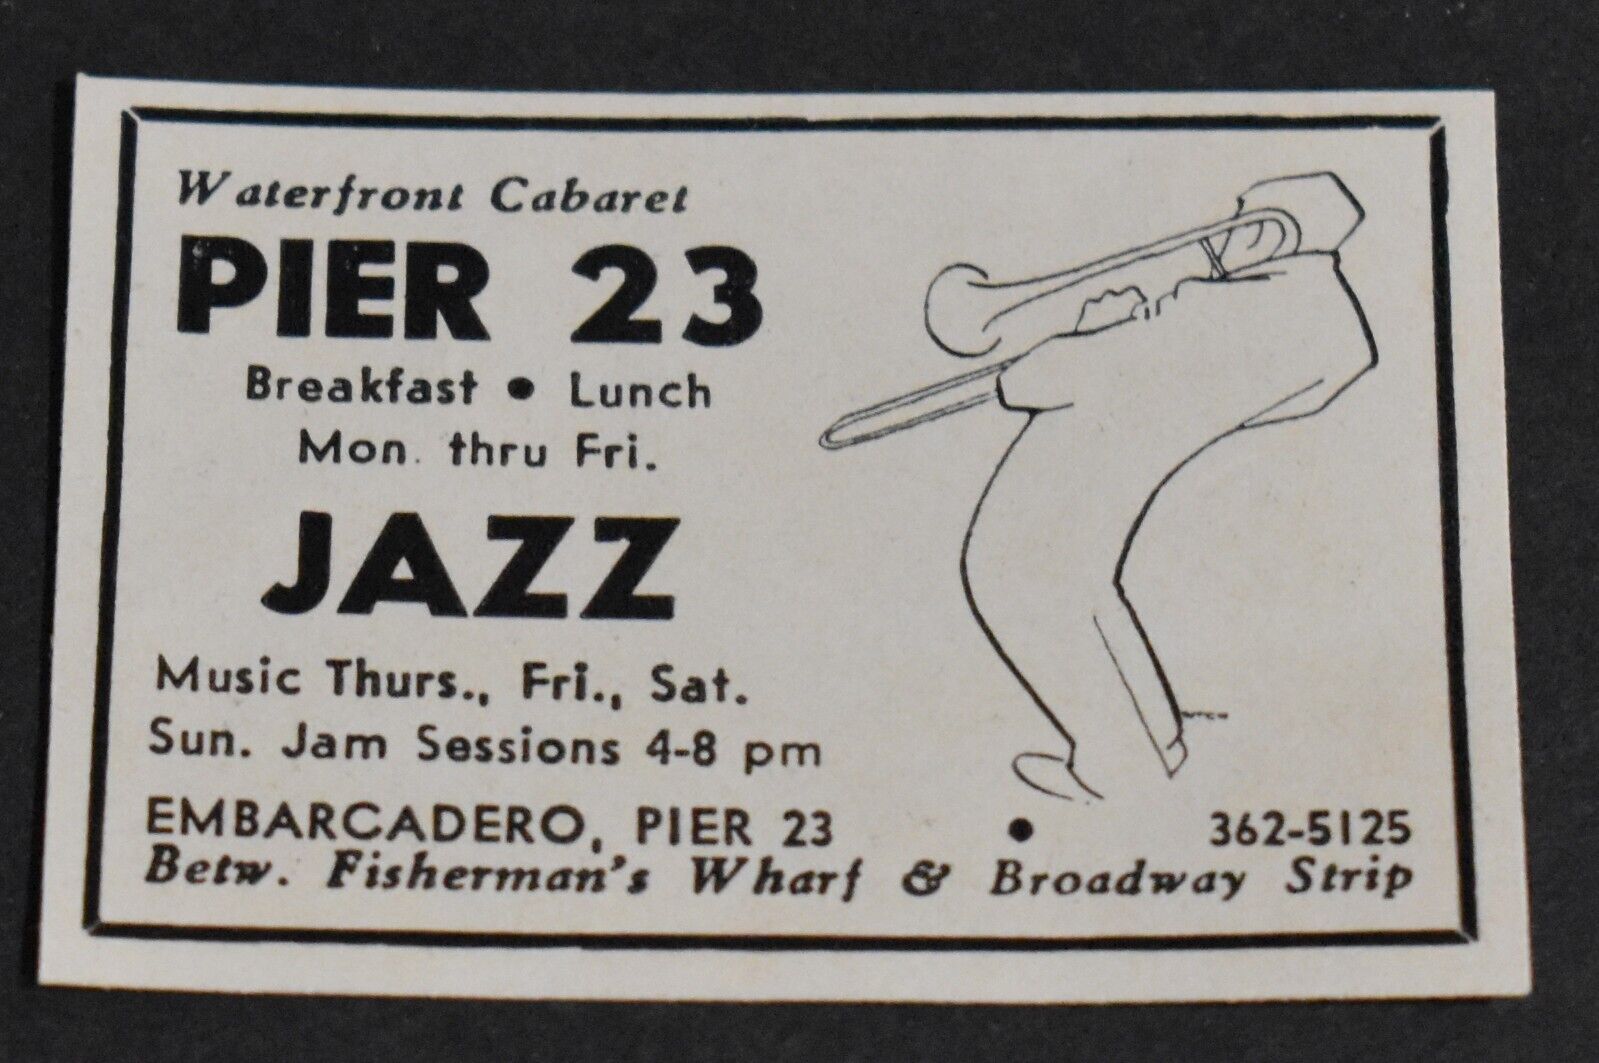 1969 Print Ad San Francisco Pier 23 Waterfront Cabaret Jazz Music Restaurant art